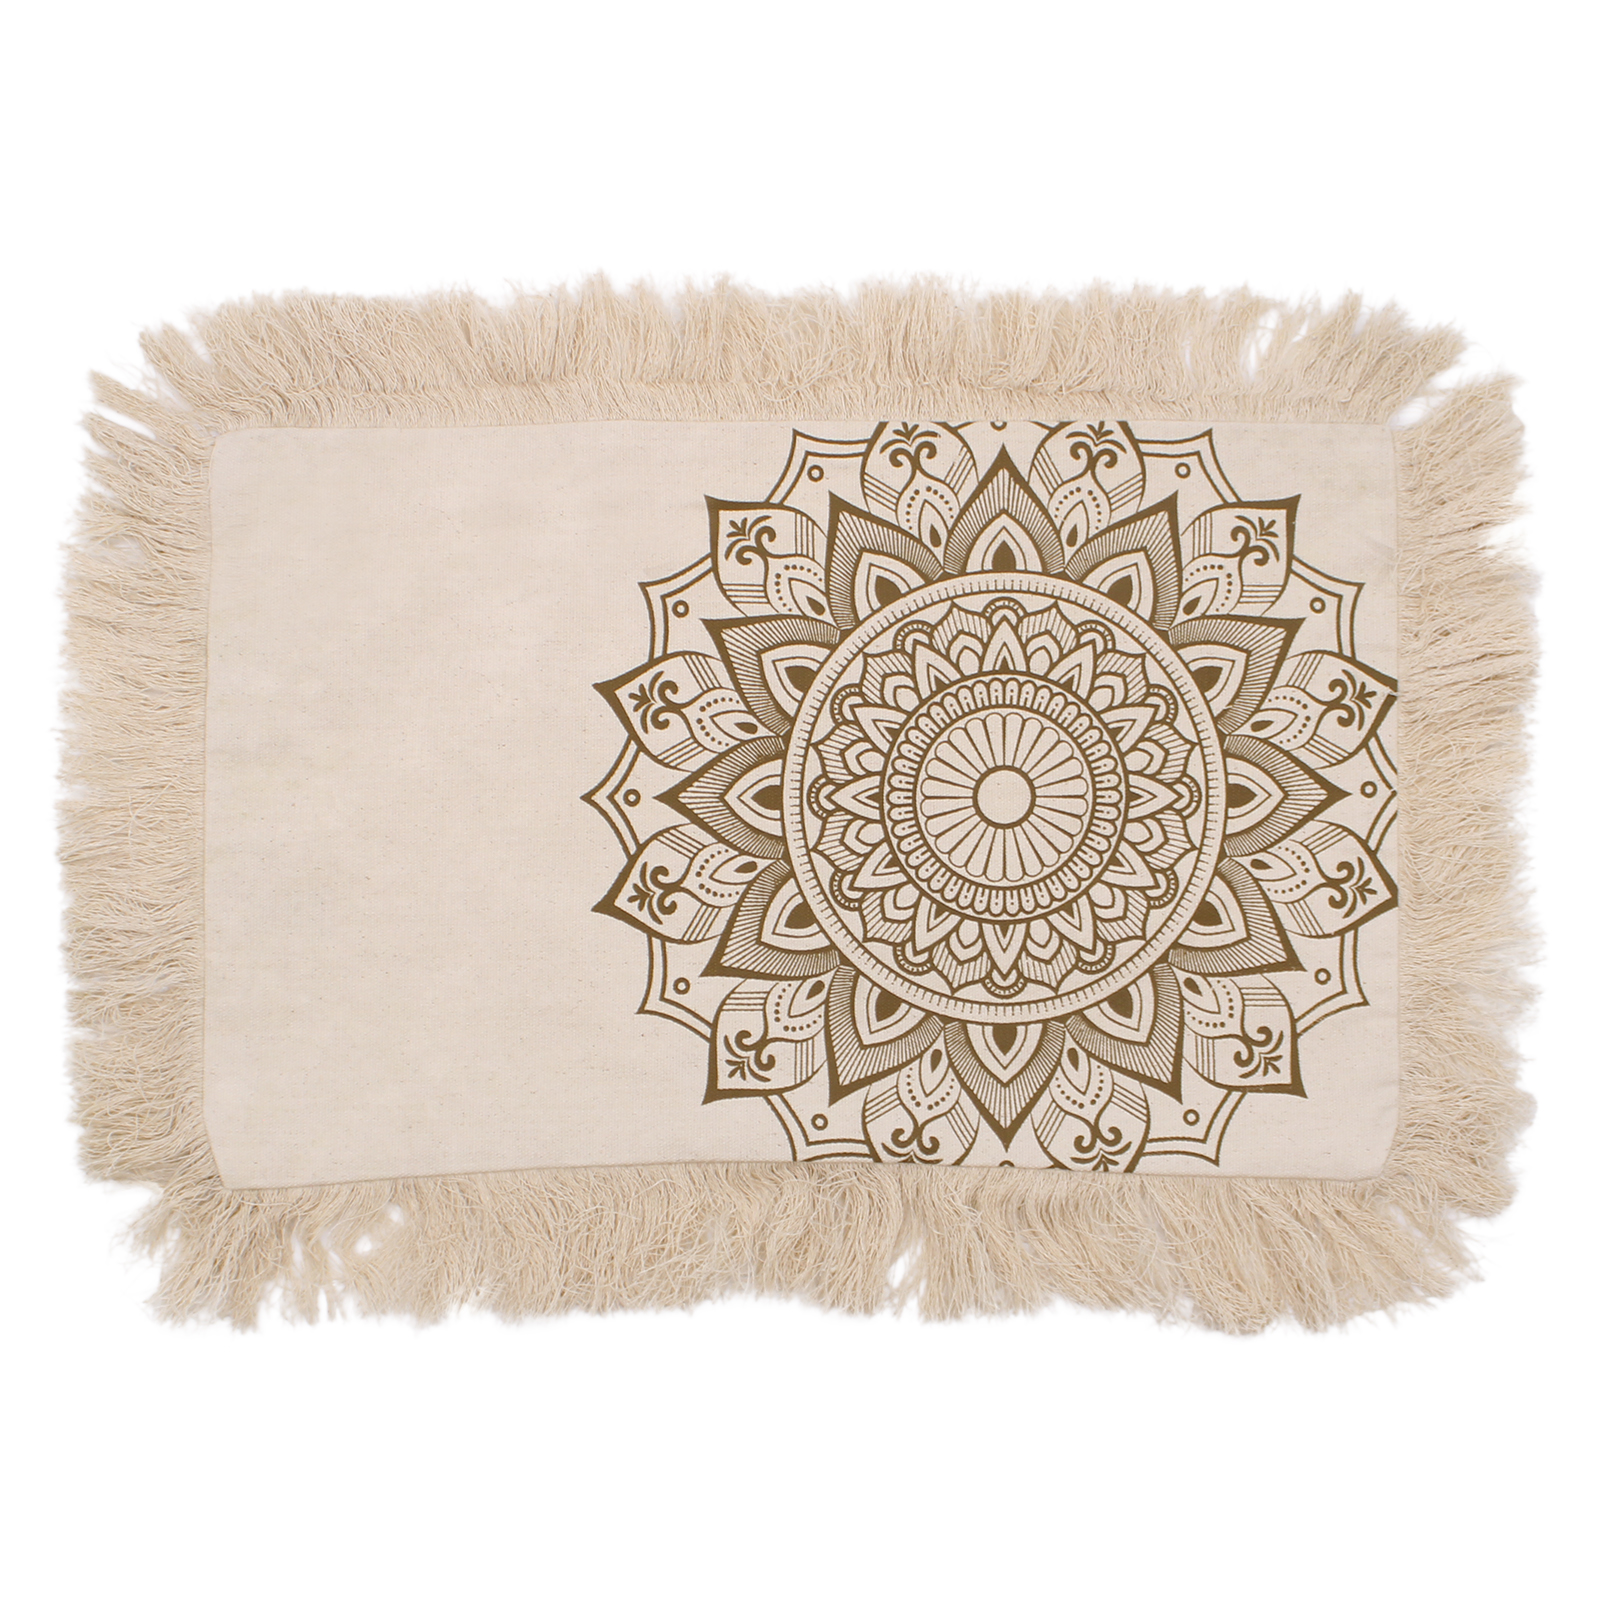 Lotus Mandala Cushion Cover - 30x50cm - bronze